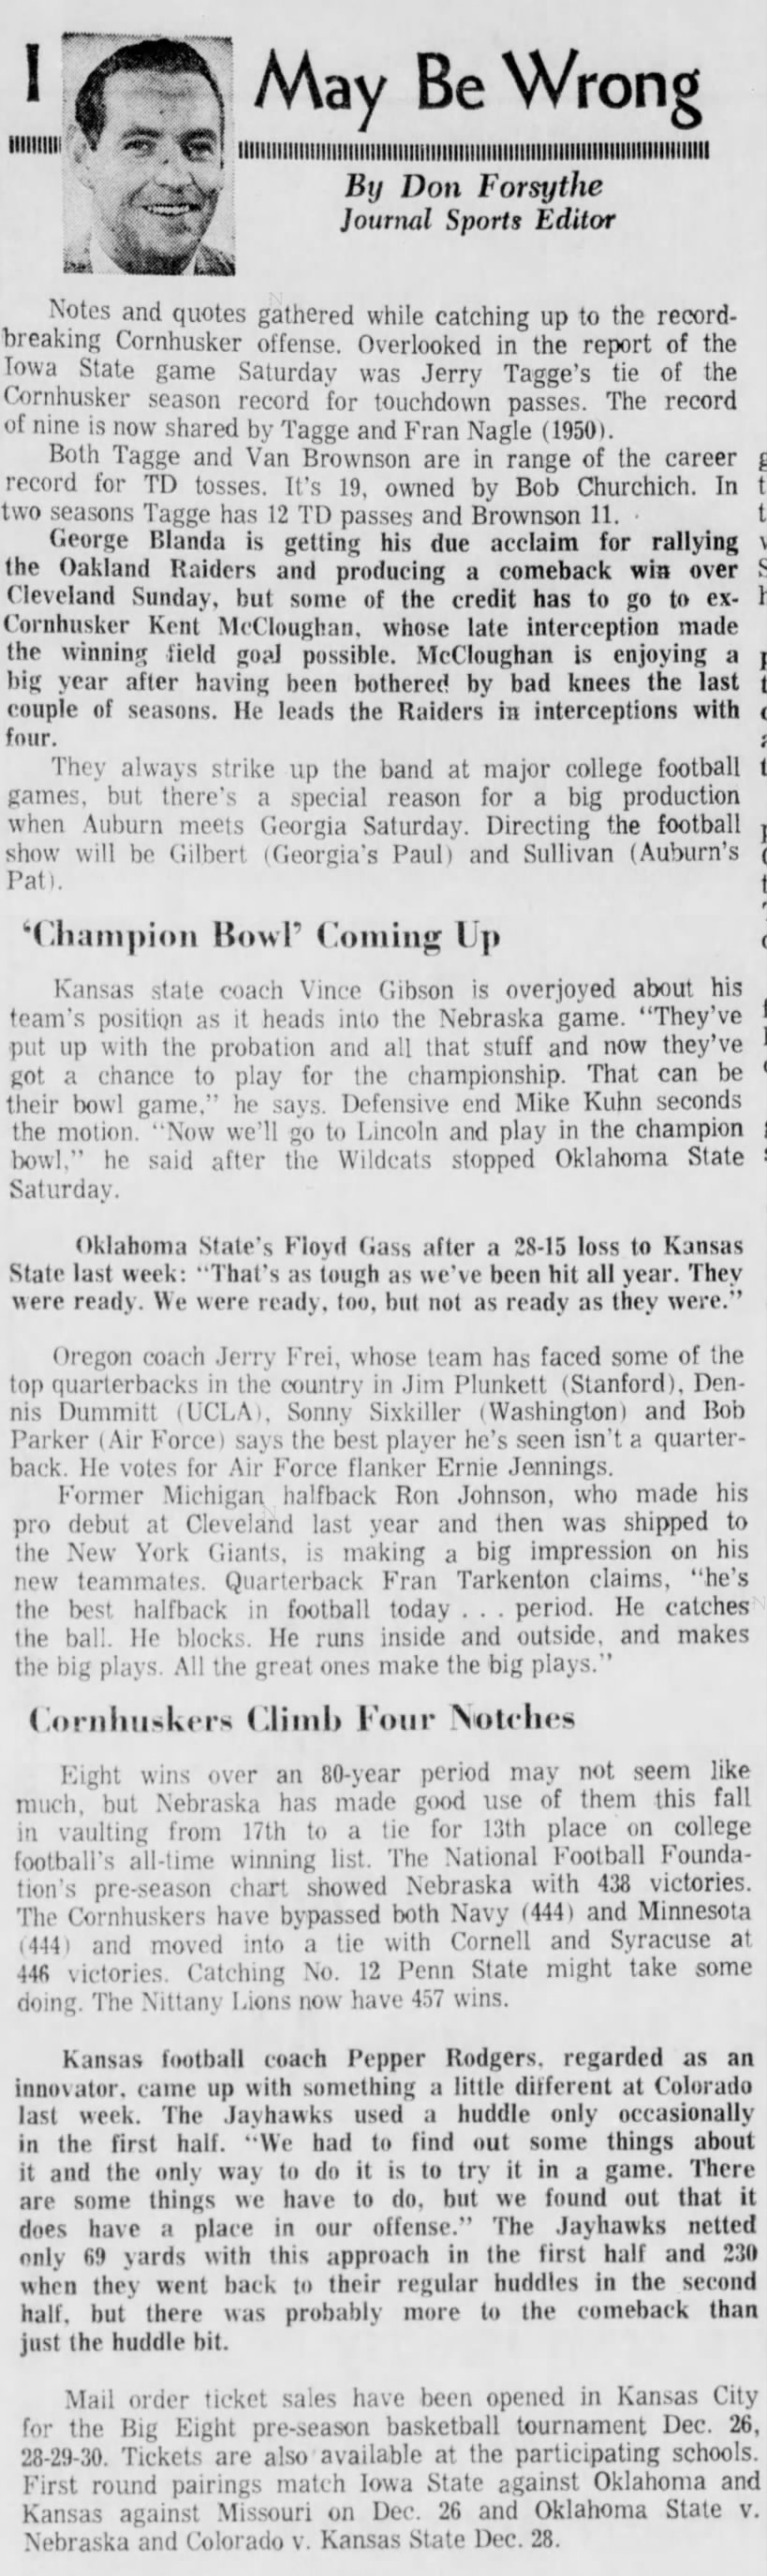 1970.11 Forsythe column, Kansas State week